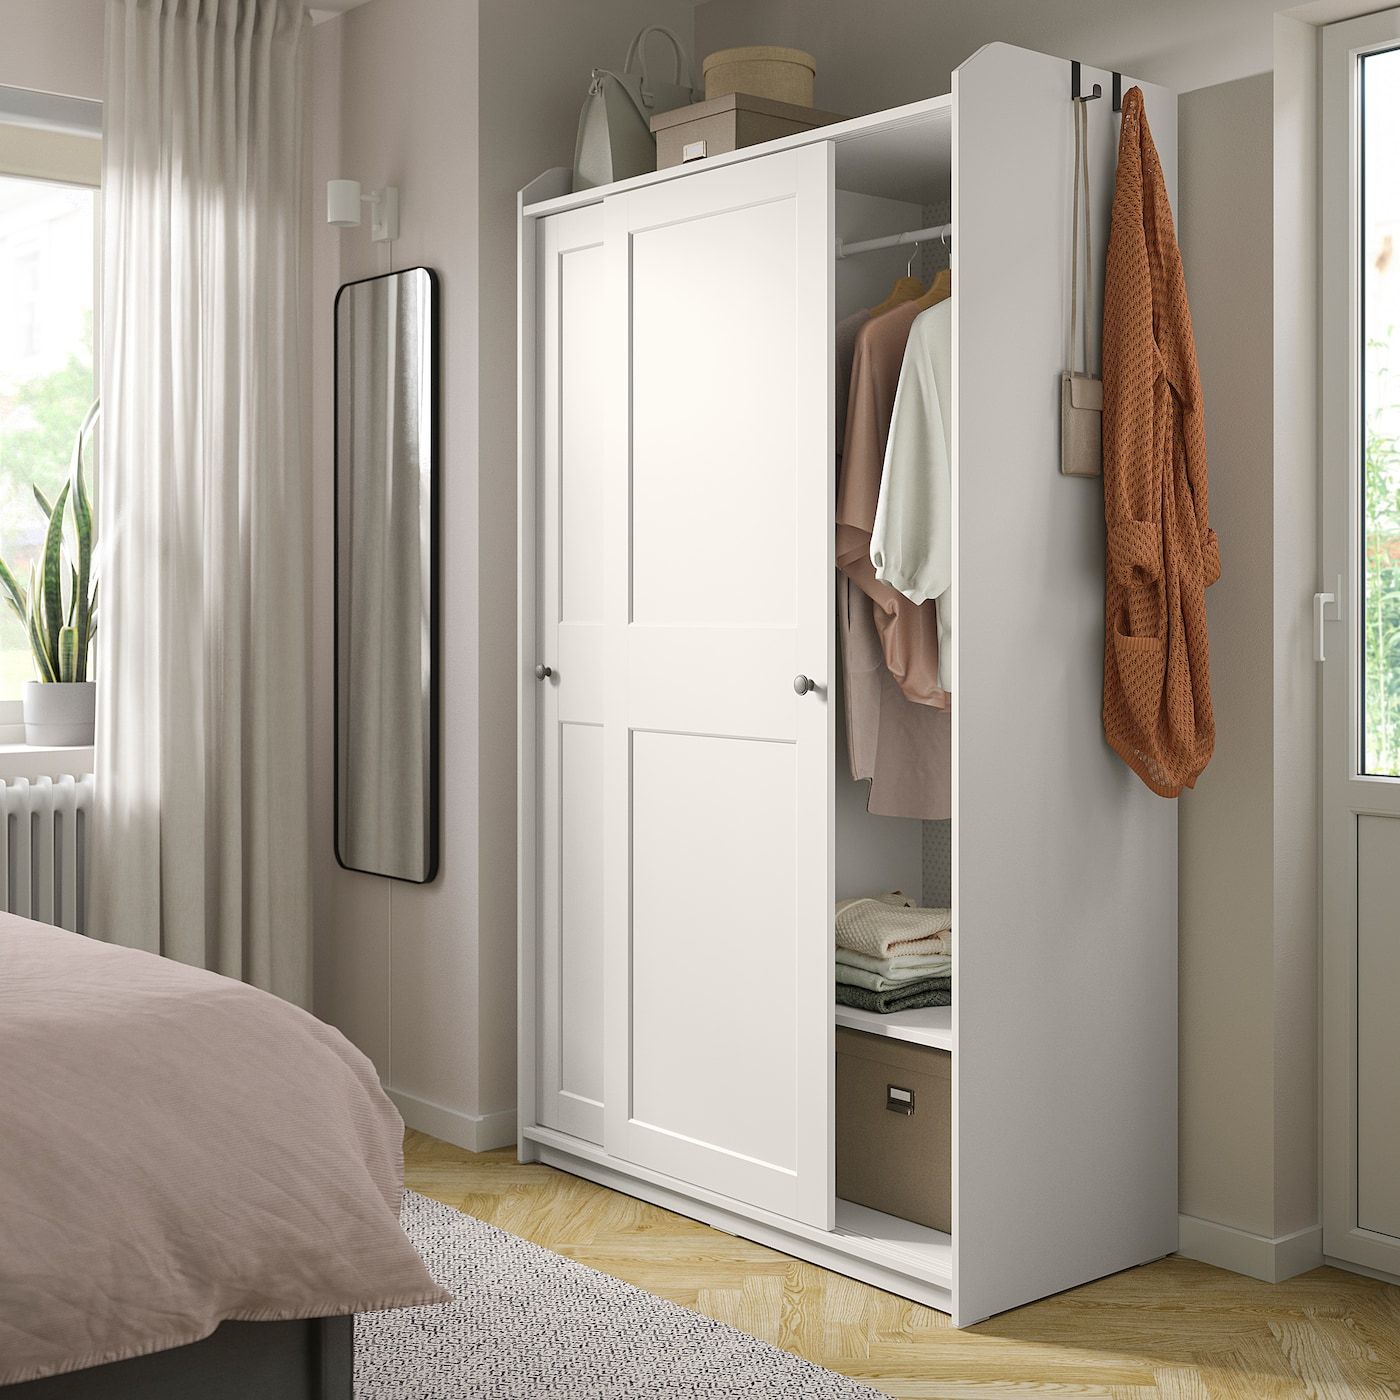 Hauga Wardrobe With Sliding Doors, White, 118x55x199 Cm – Ikea With Sliding Door Wardrobes (View 6 of 15)